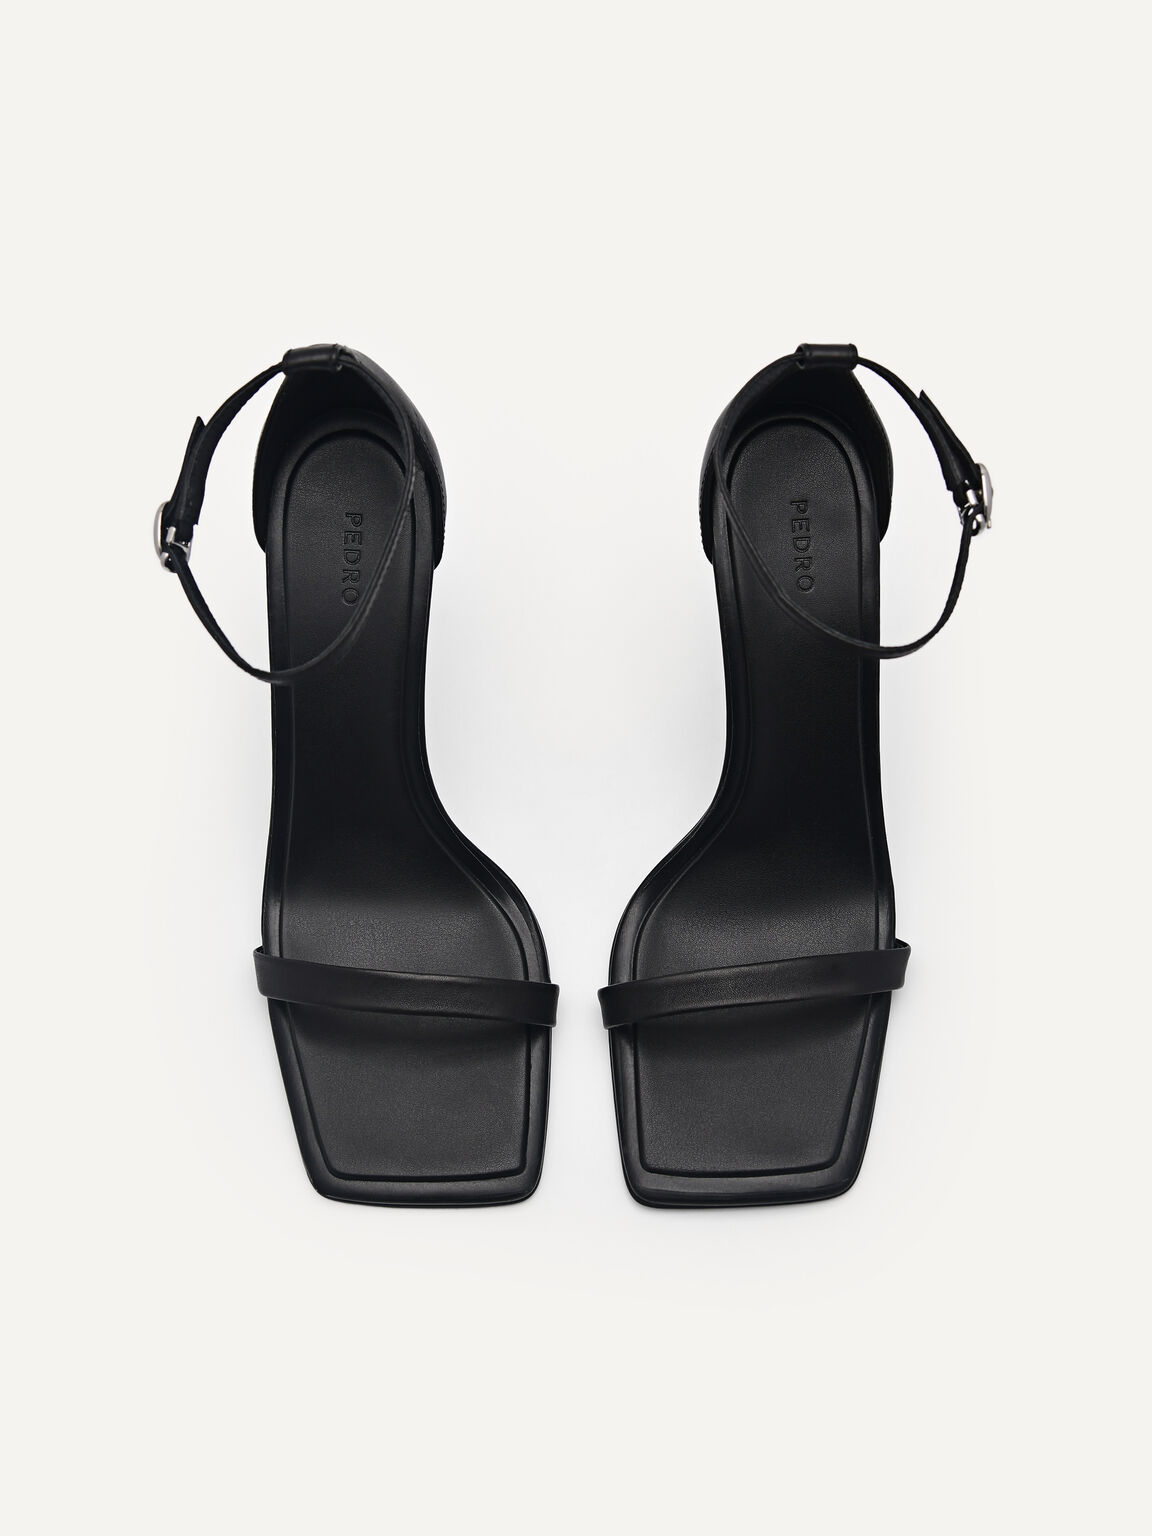 PEDRO Studio Donna Leather Heels, Black